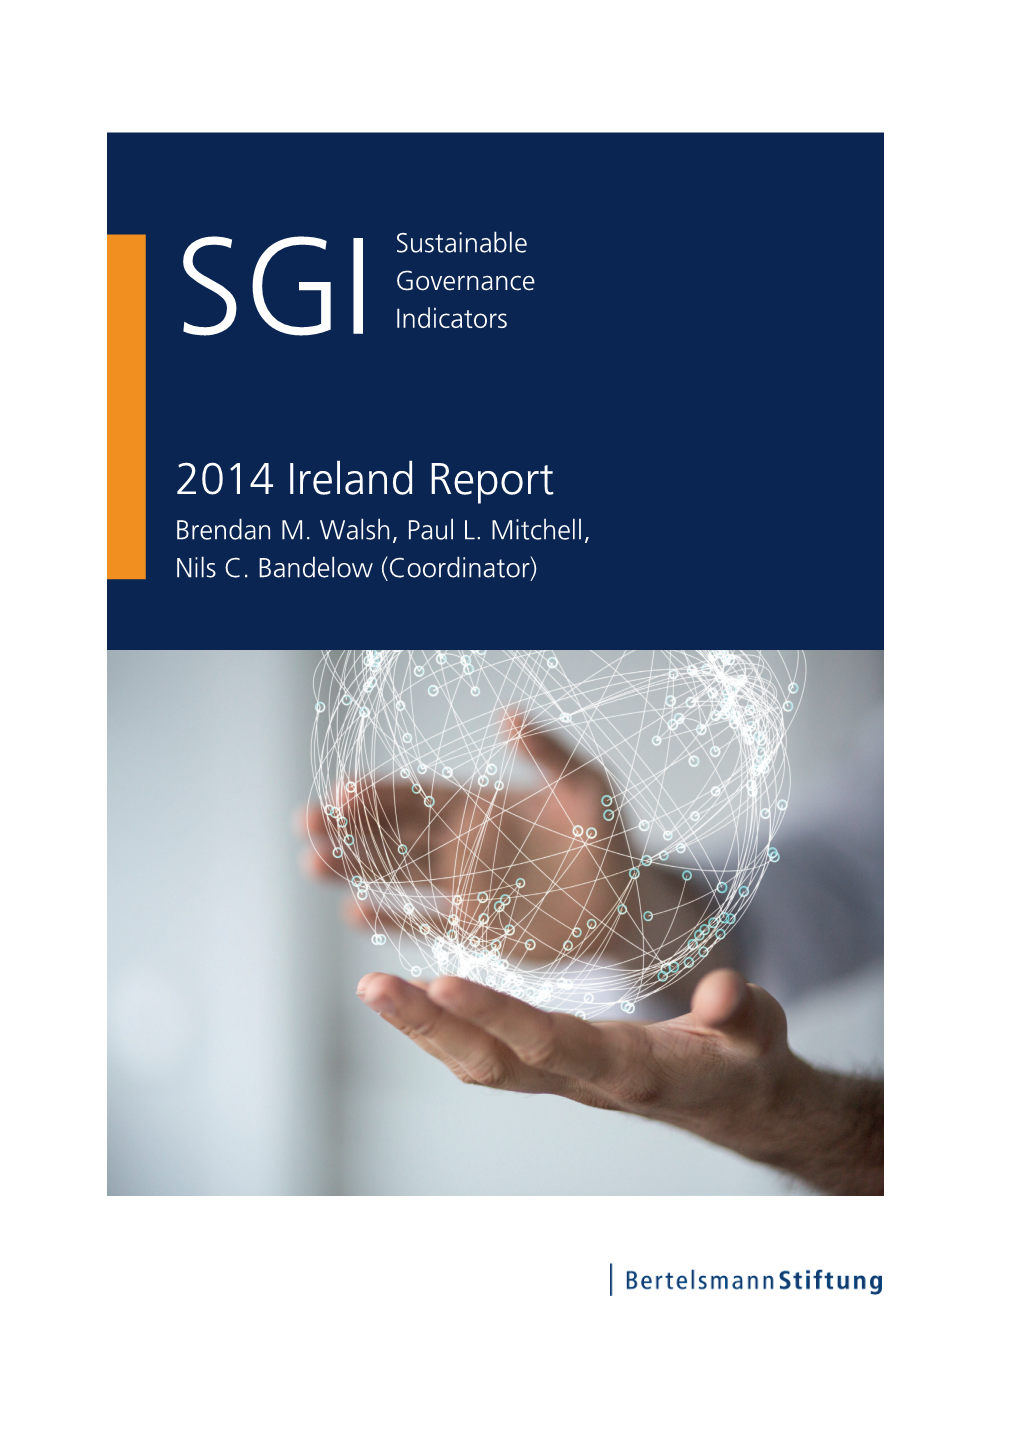 2014 Ireland Country Report | SGI Sustainable Governance Indicators